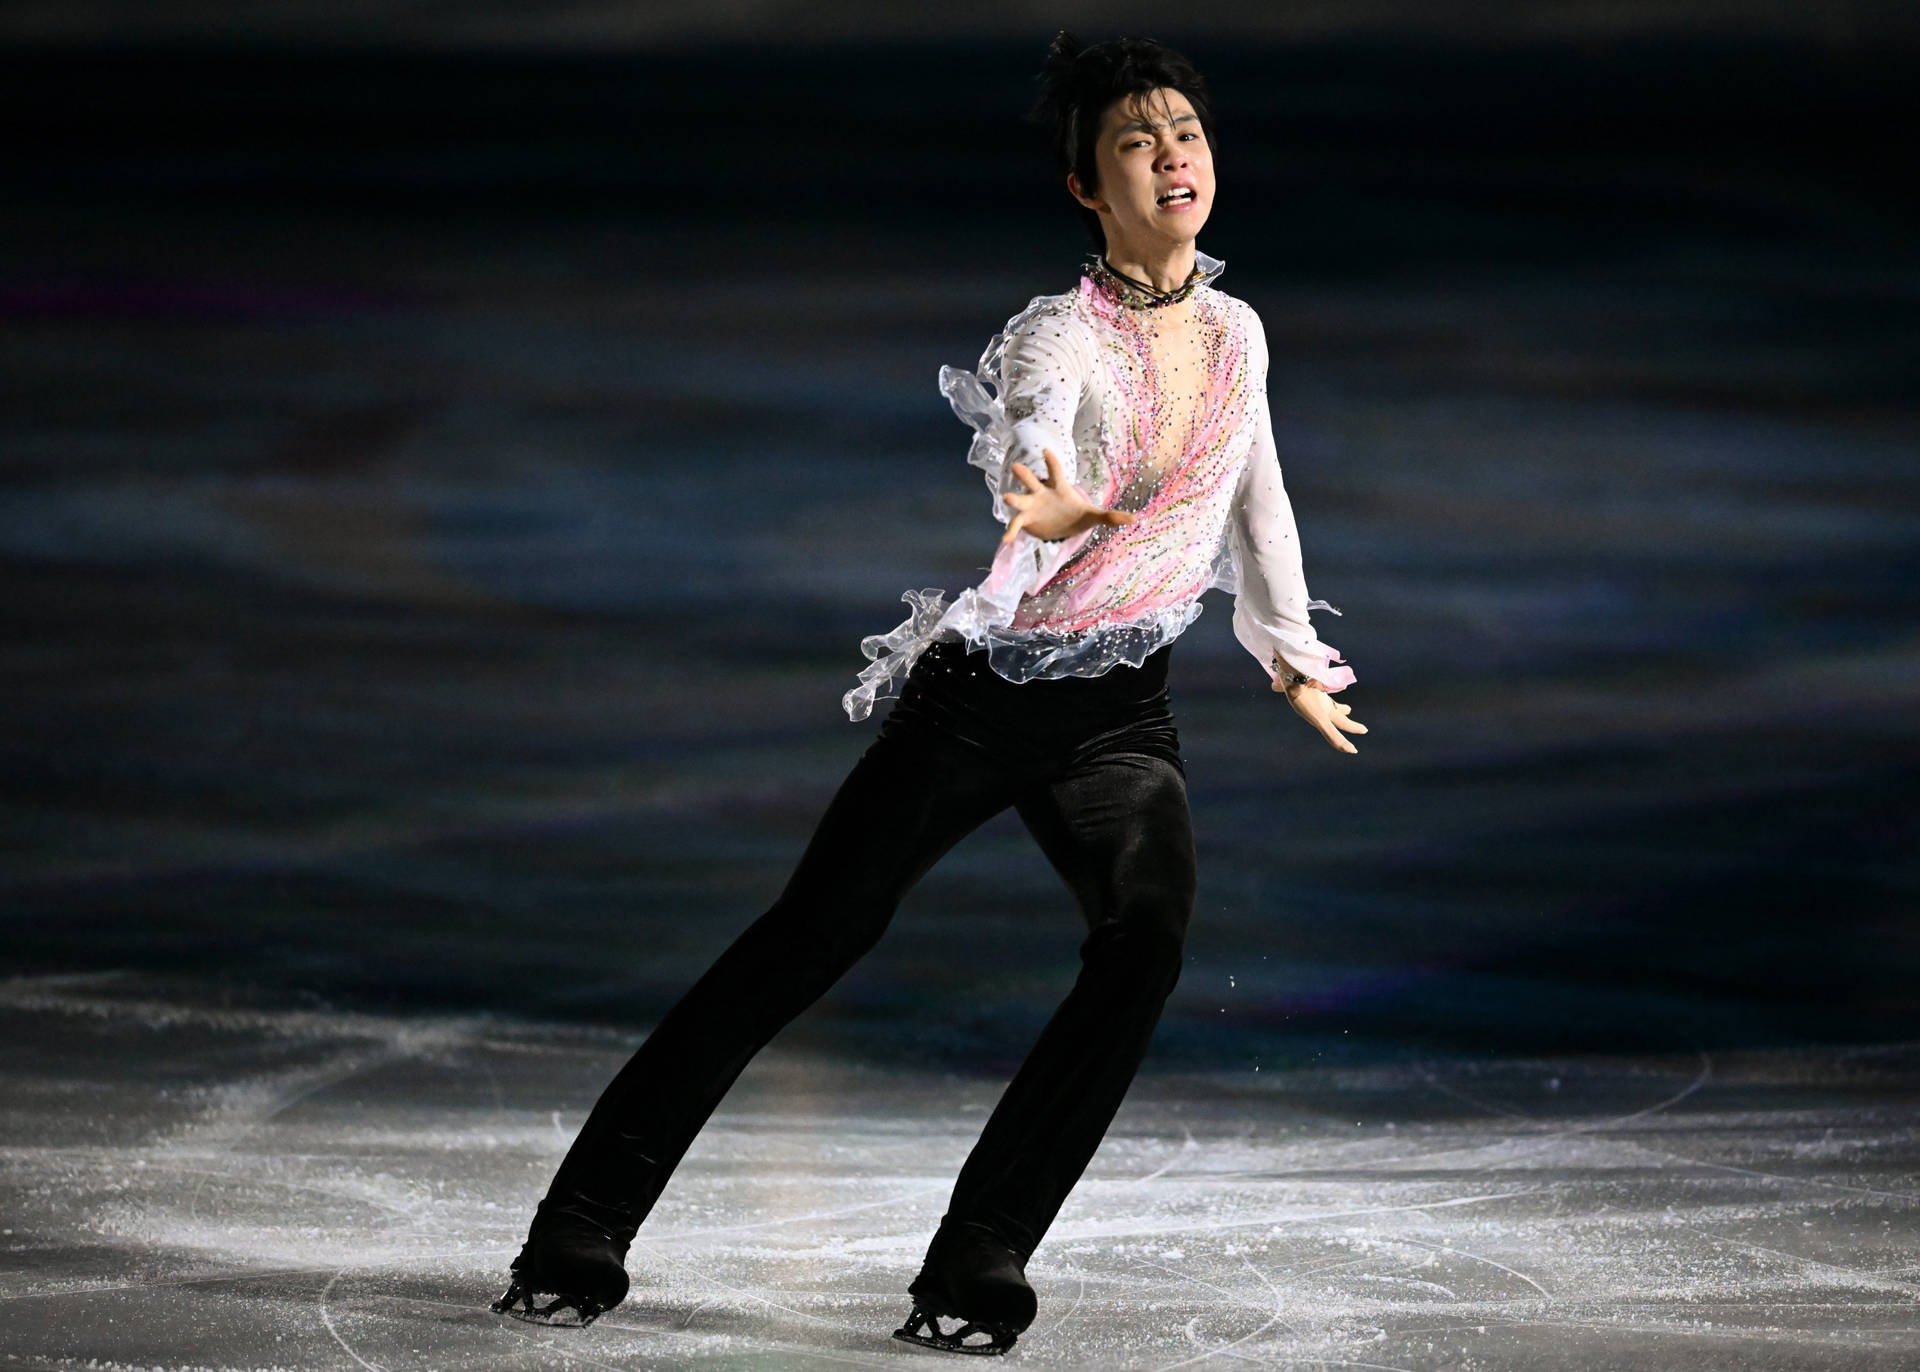 Japanese Figure Skating Athlete Yuzuru Hanyu At Winter Olympics Wallpaper